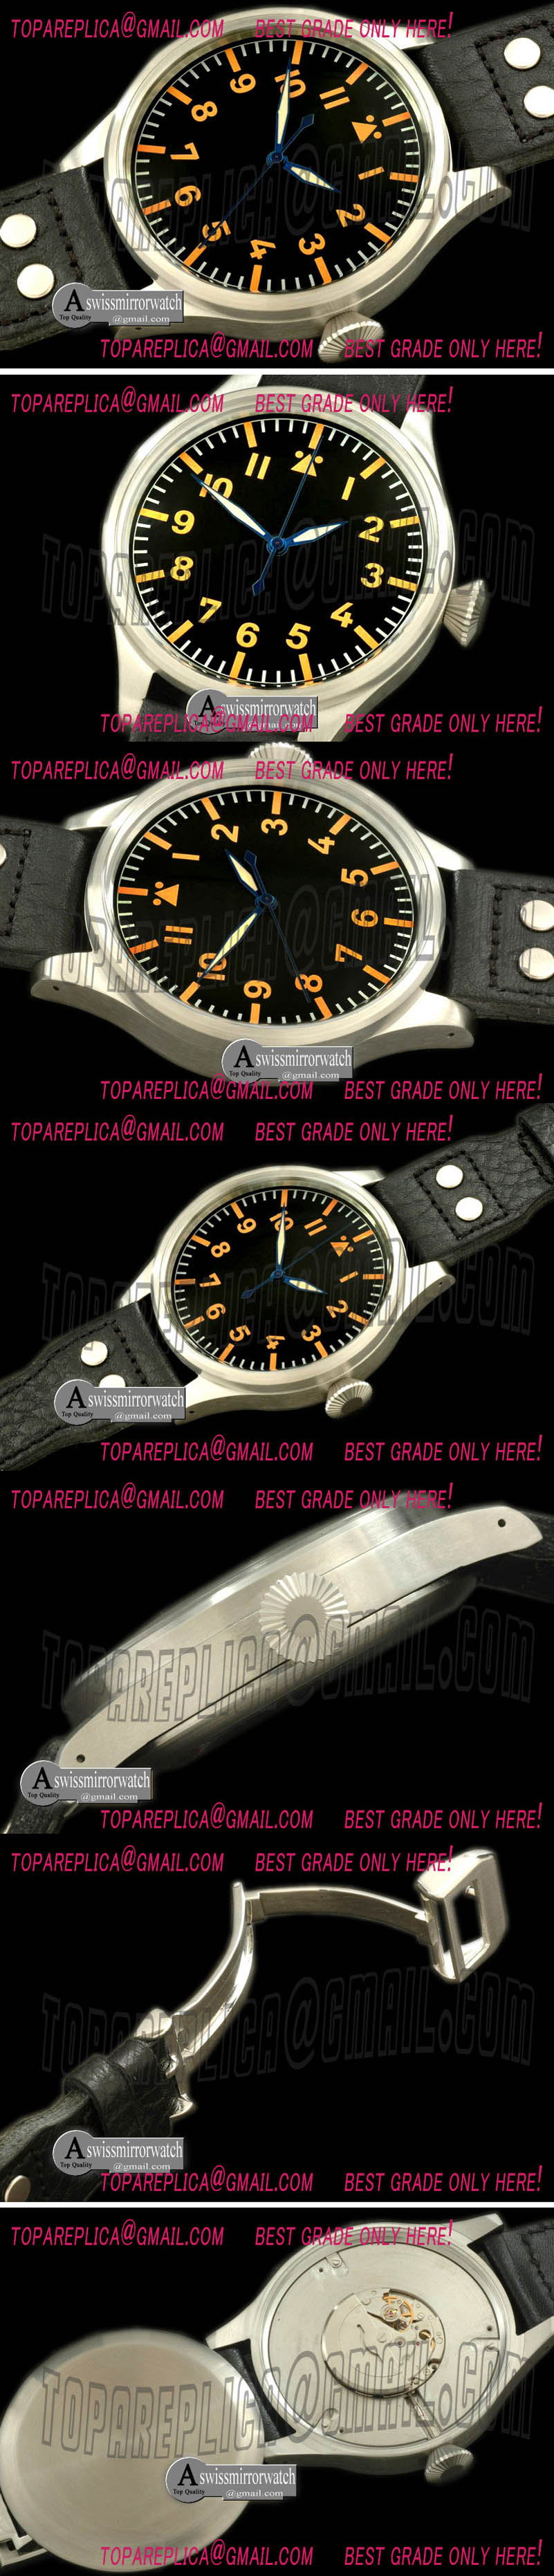 Replica IWC Watches